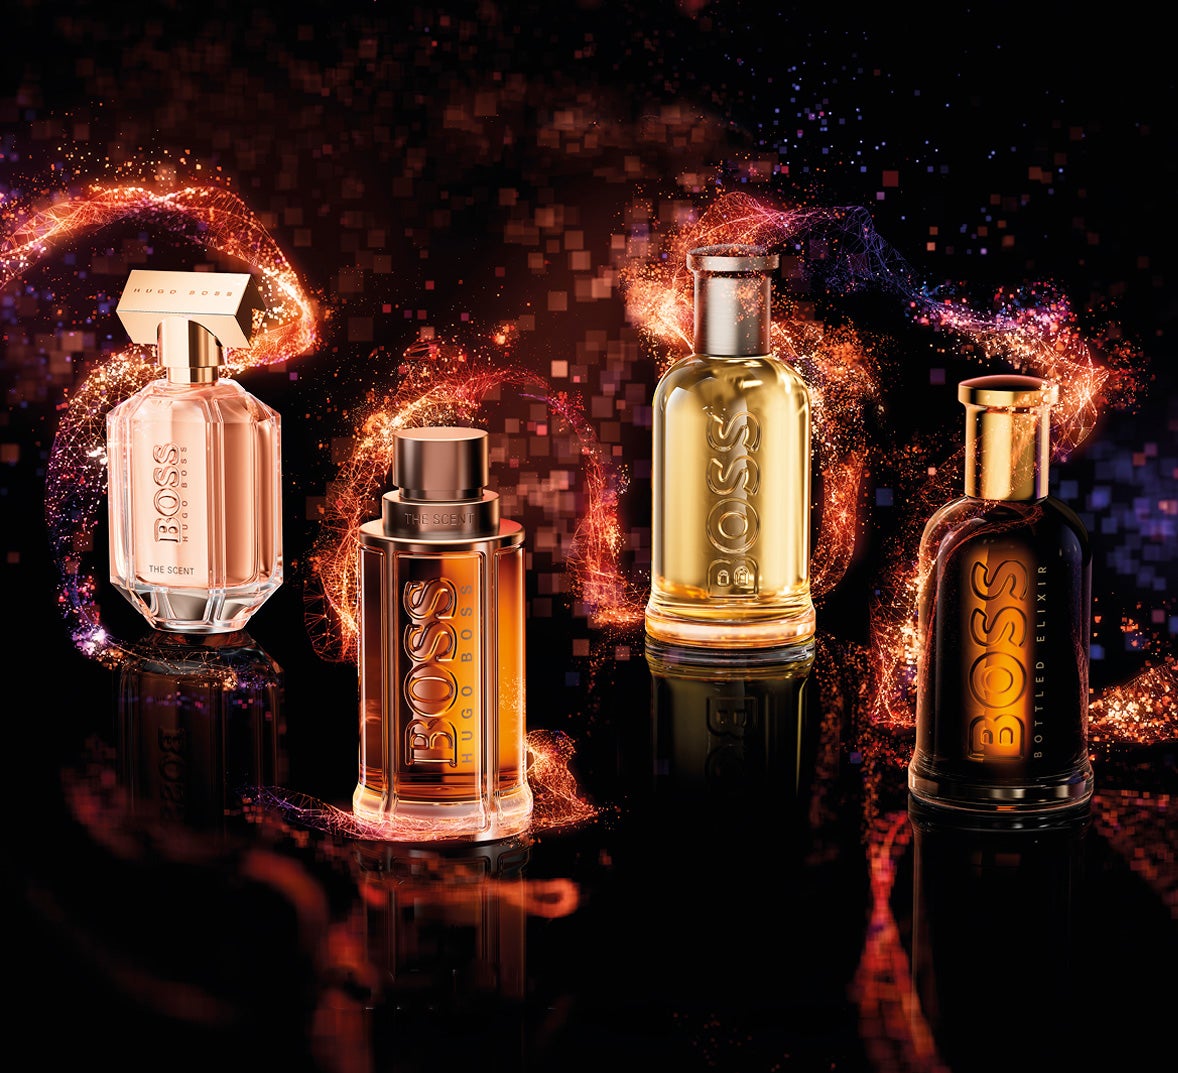 Hugo Boss Perfumes, Bath & Body & Gifts